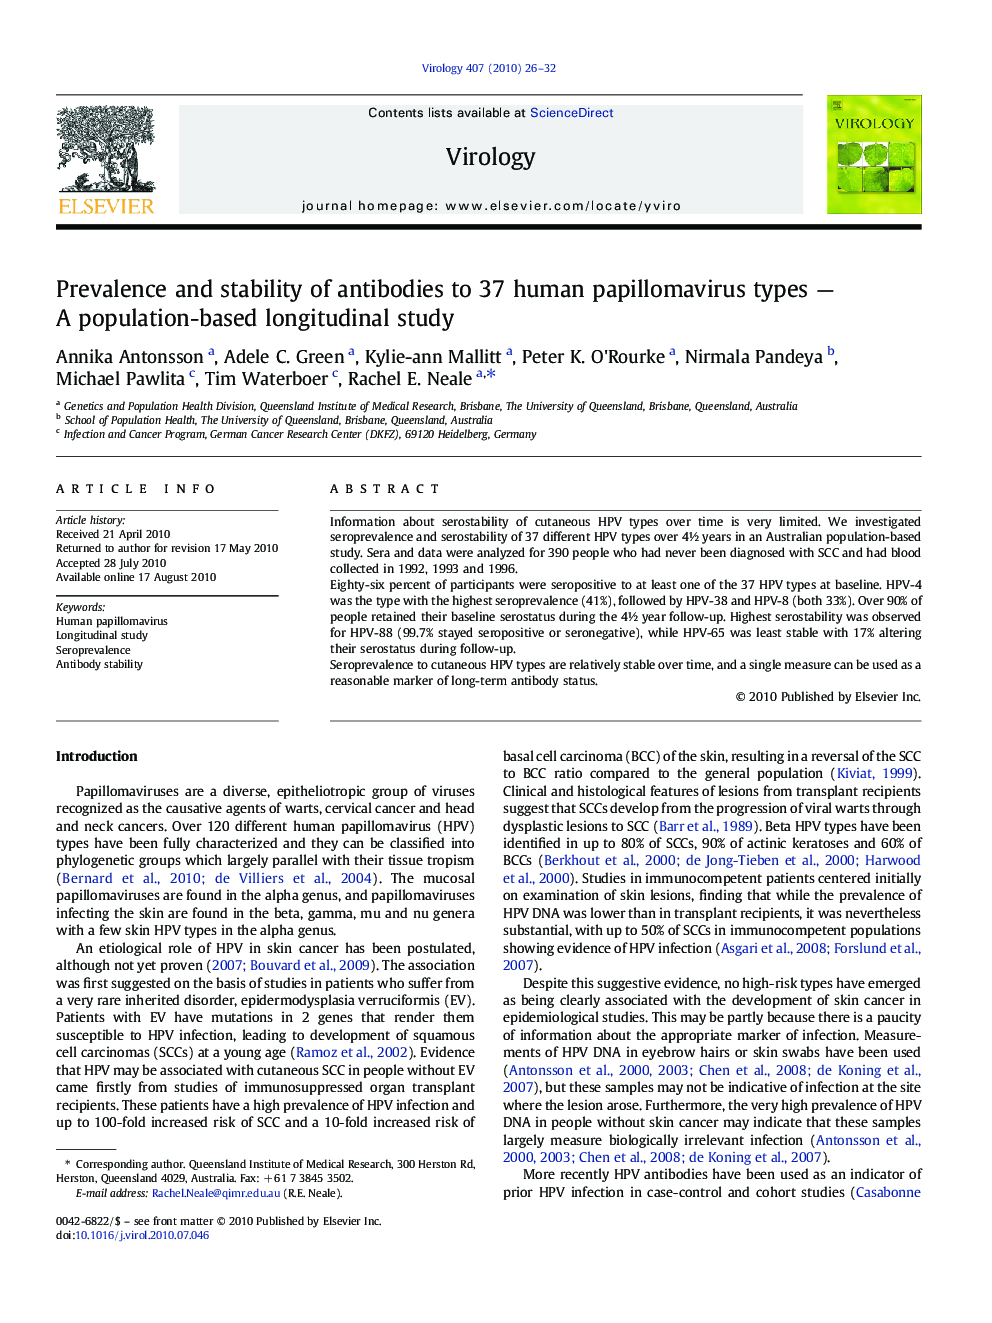 Prevalence and stability of antibodies to 37 human papillomavirus types — A population-based longitudinal study